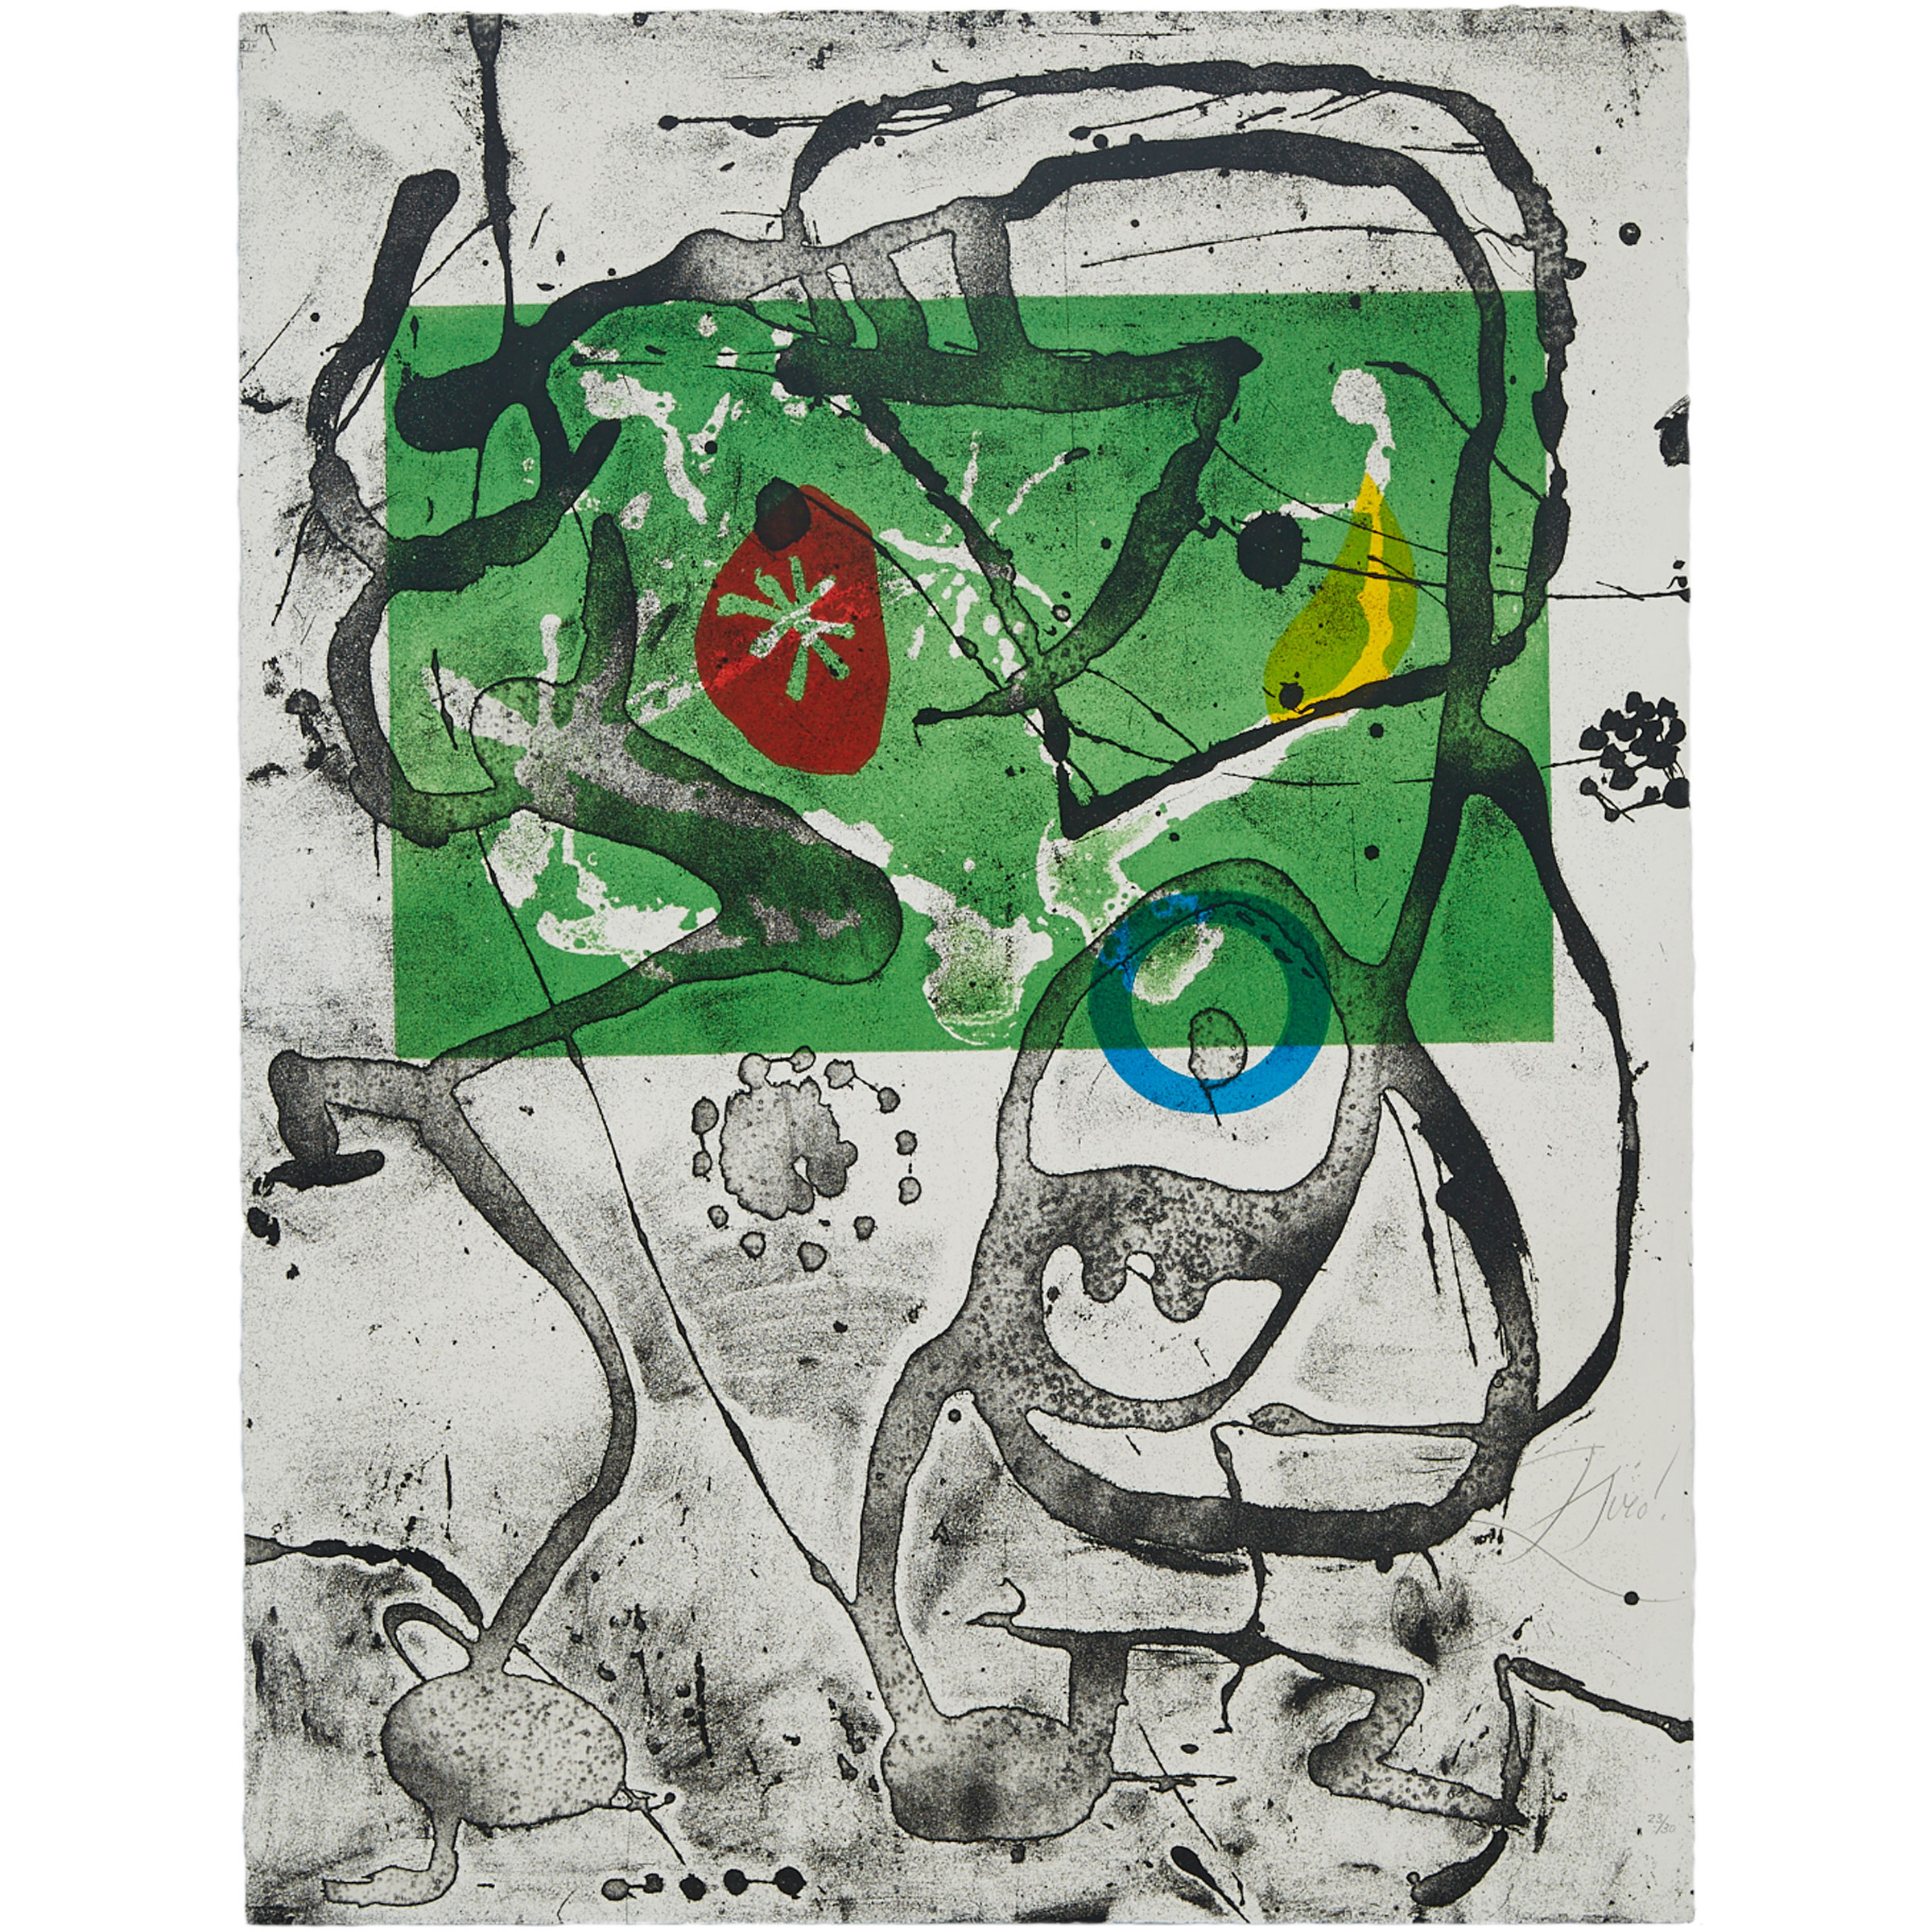 Joan Miró (1893 - 1983)